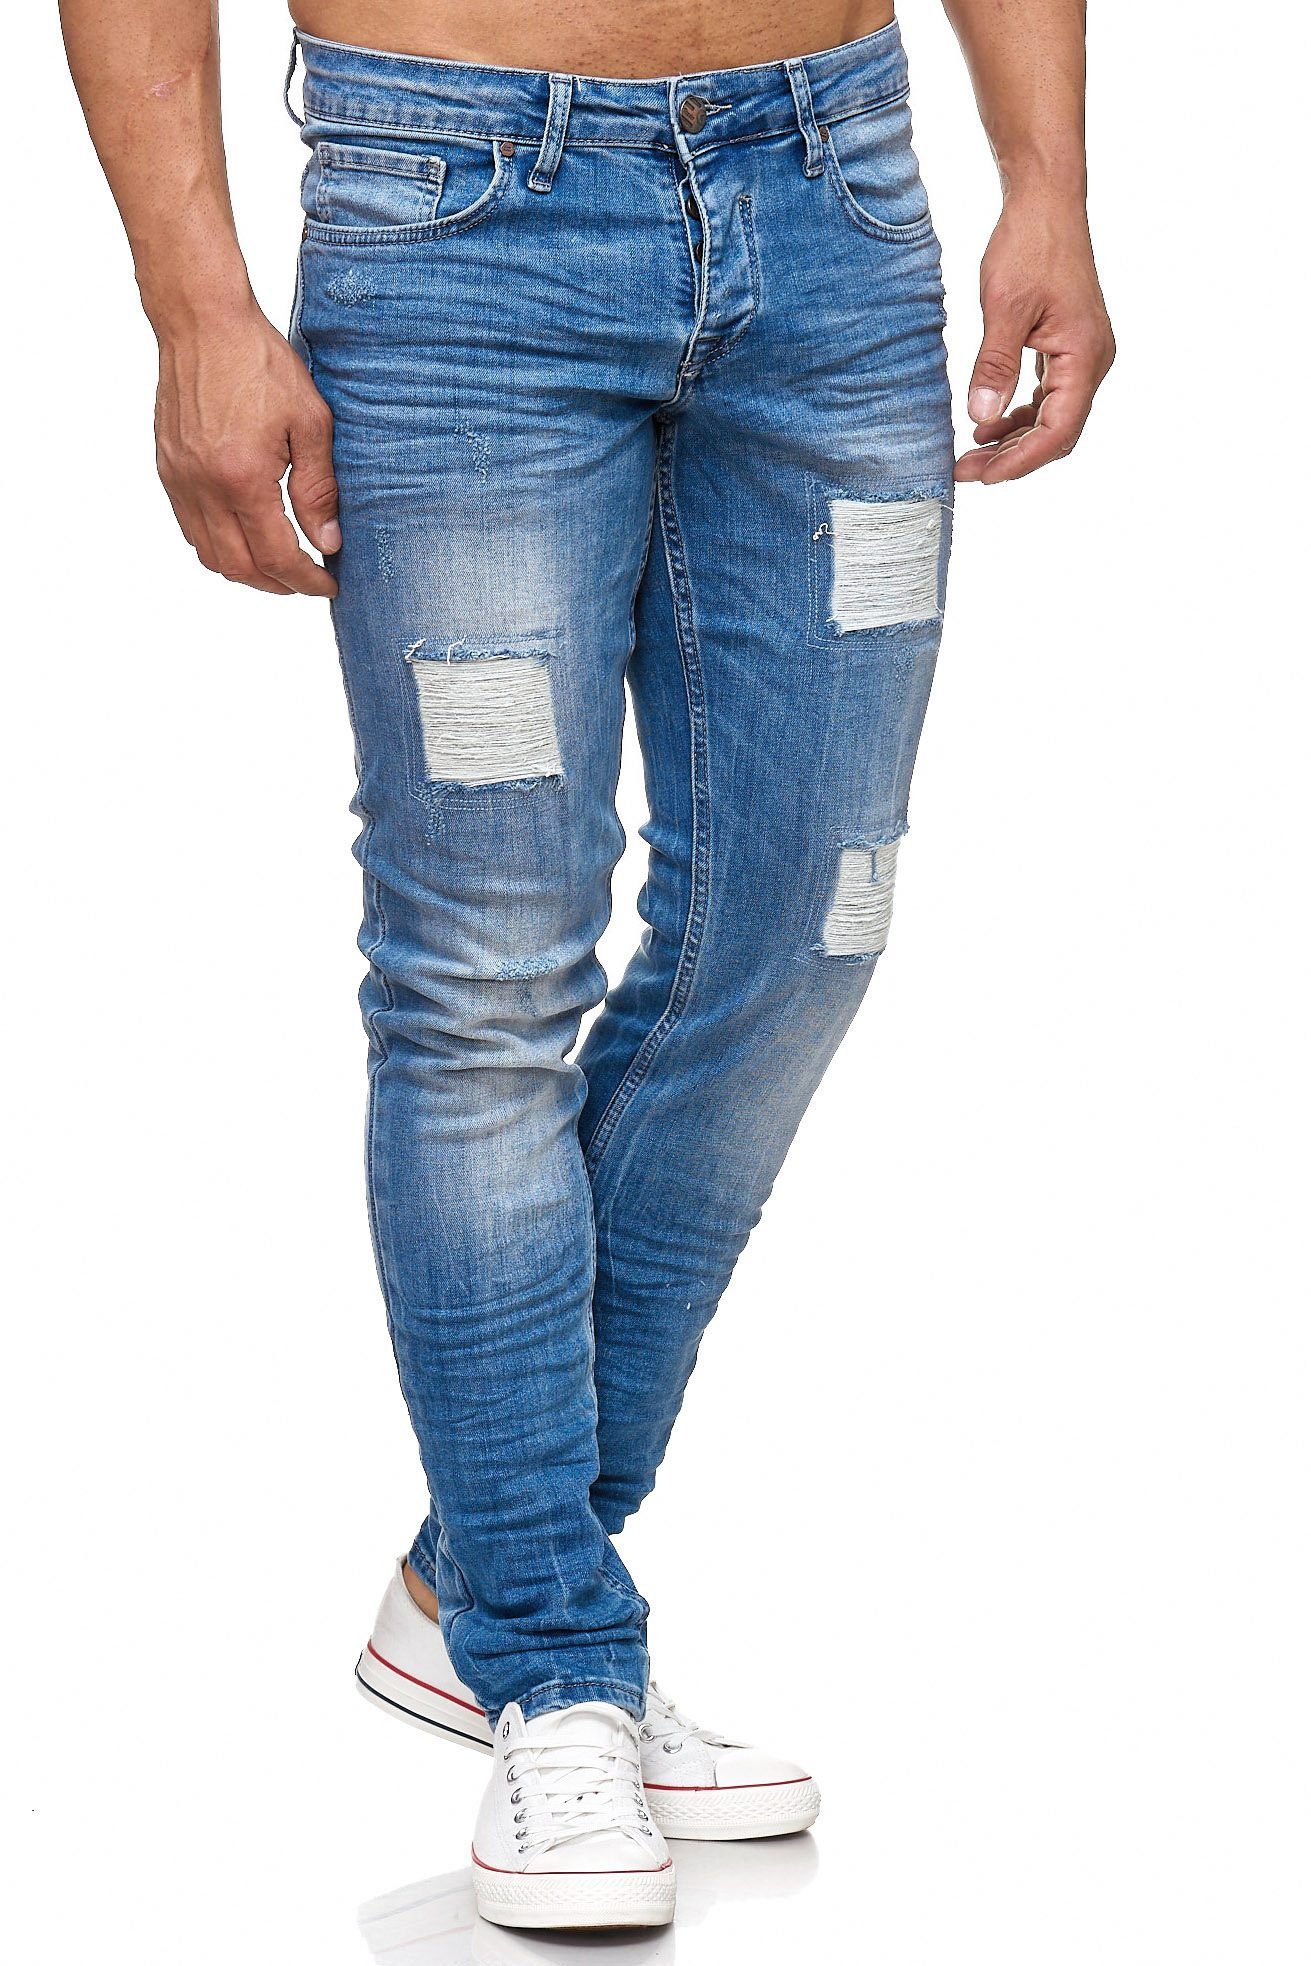 Tazzio Straight-Jeans 17505 blau Destroyed-Look im